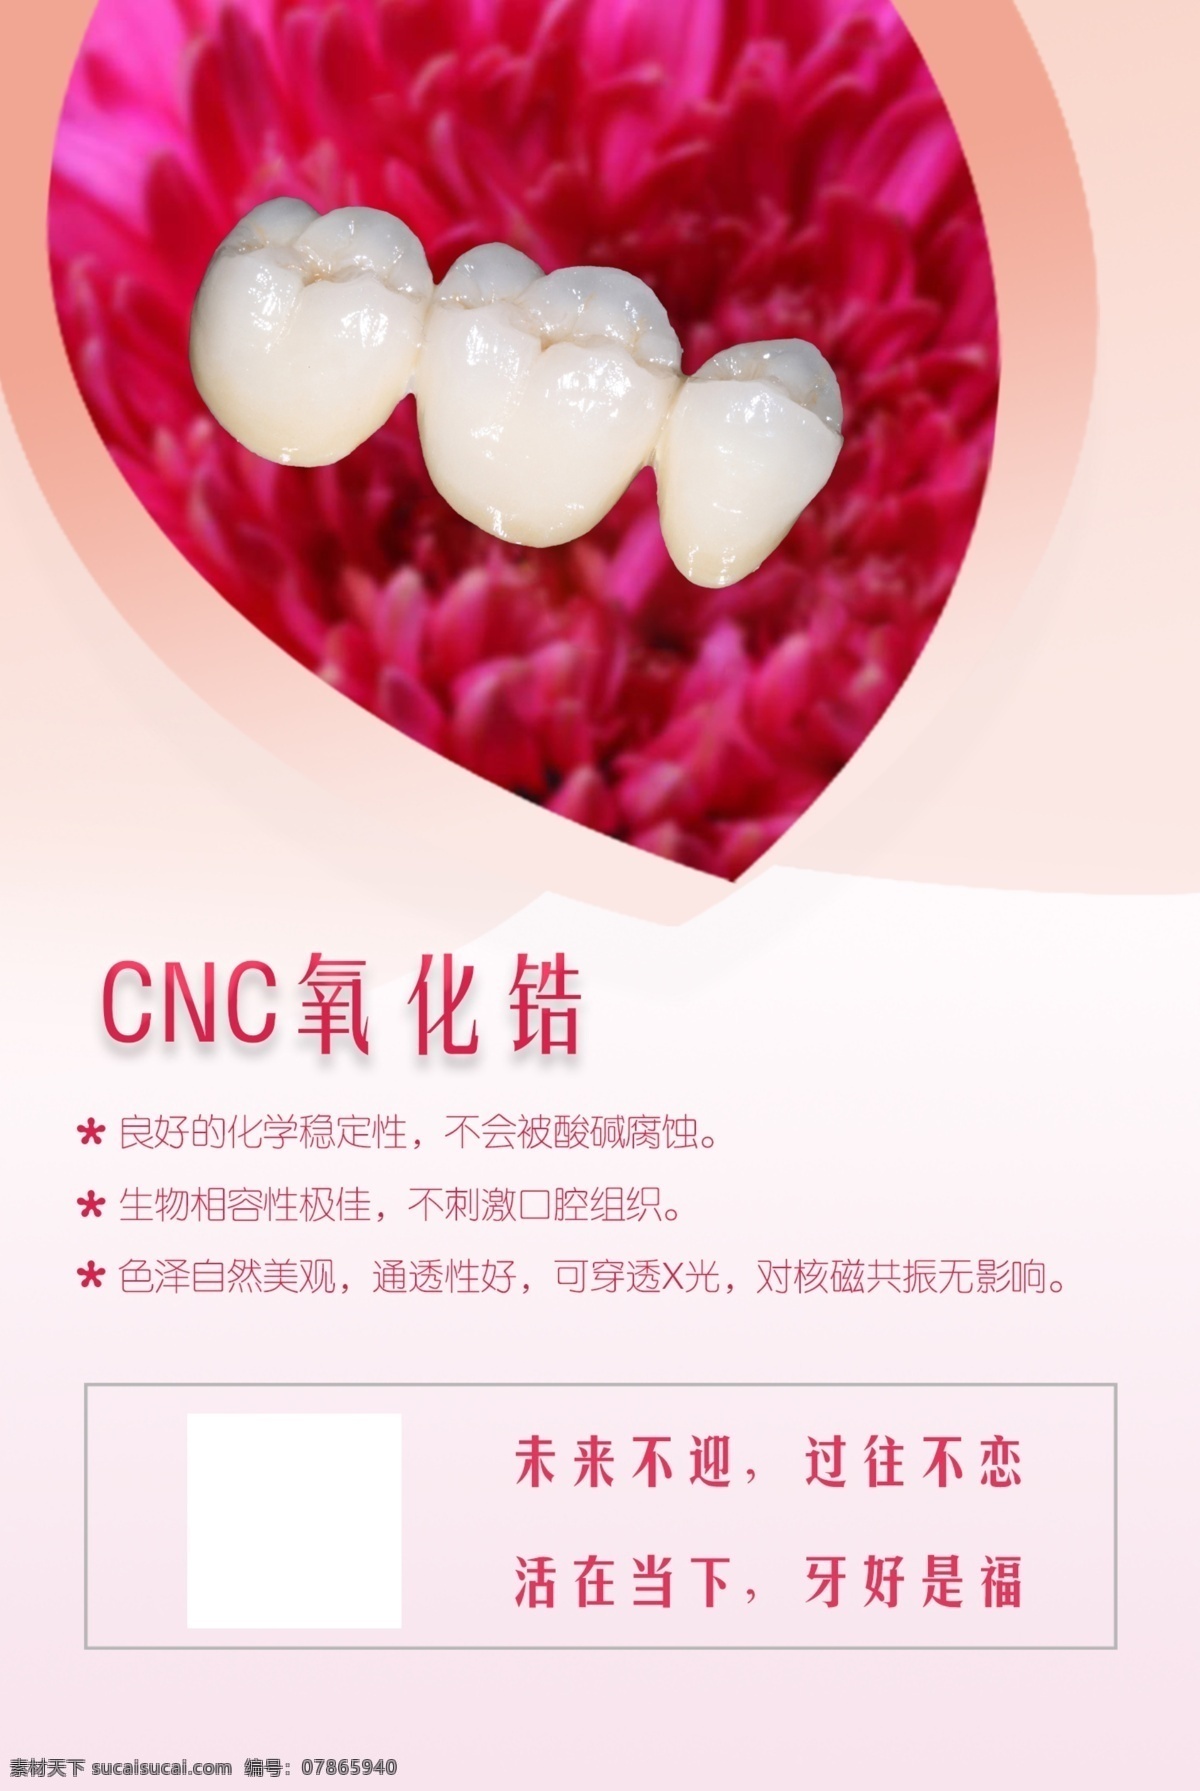 cnc氧化锆 海报 义齿 牙齿 氧化锆 粉色